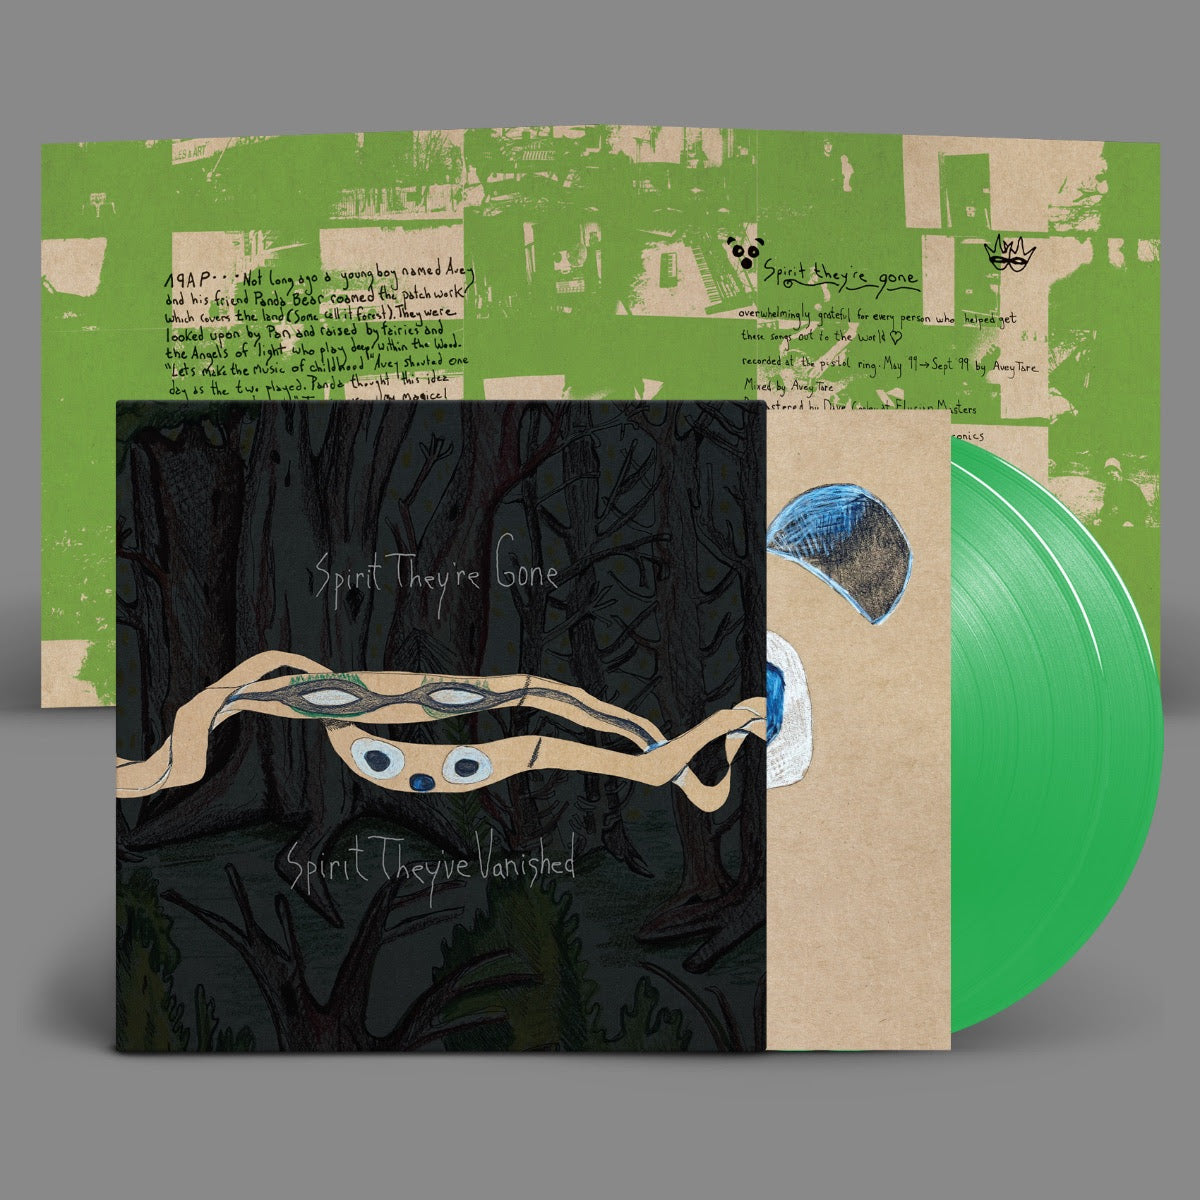 Animal Collective - Spirit They're Gone, Spirit They've Vanished (IEX)(2LP)(Grass Green Vinyl)